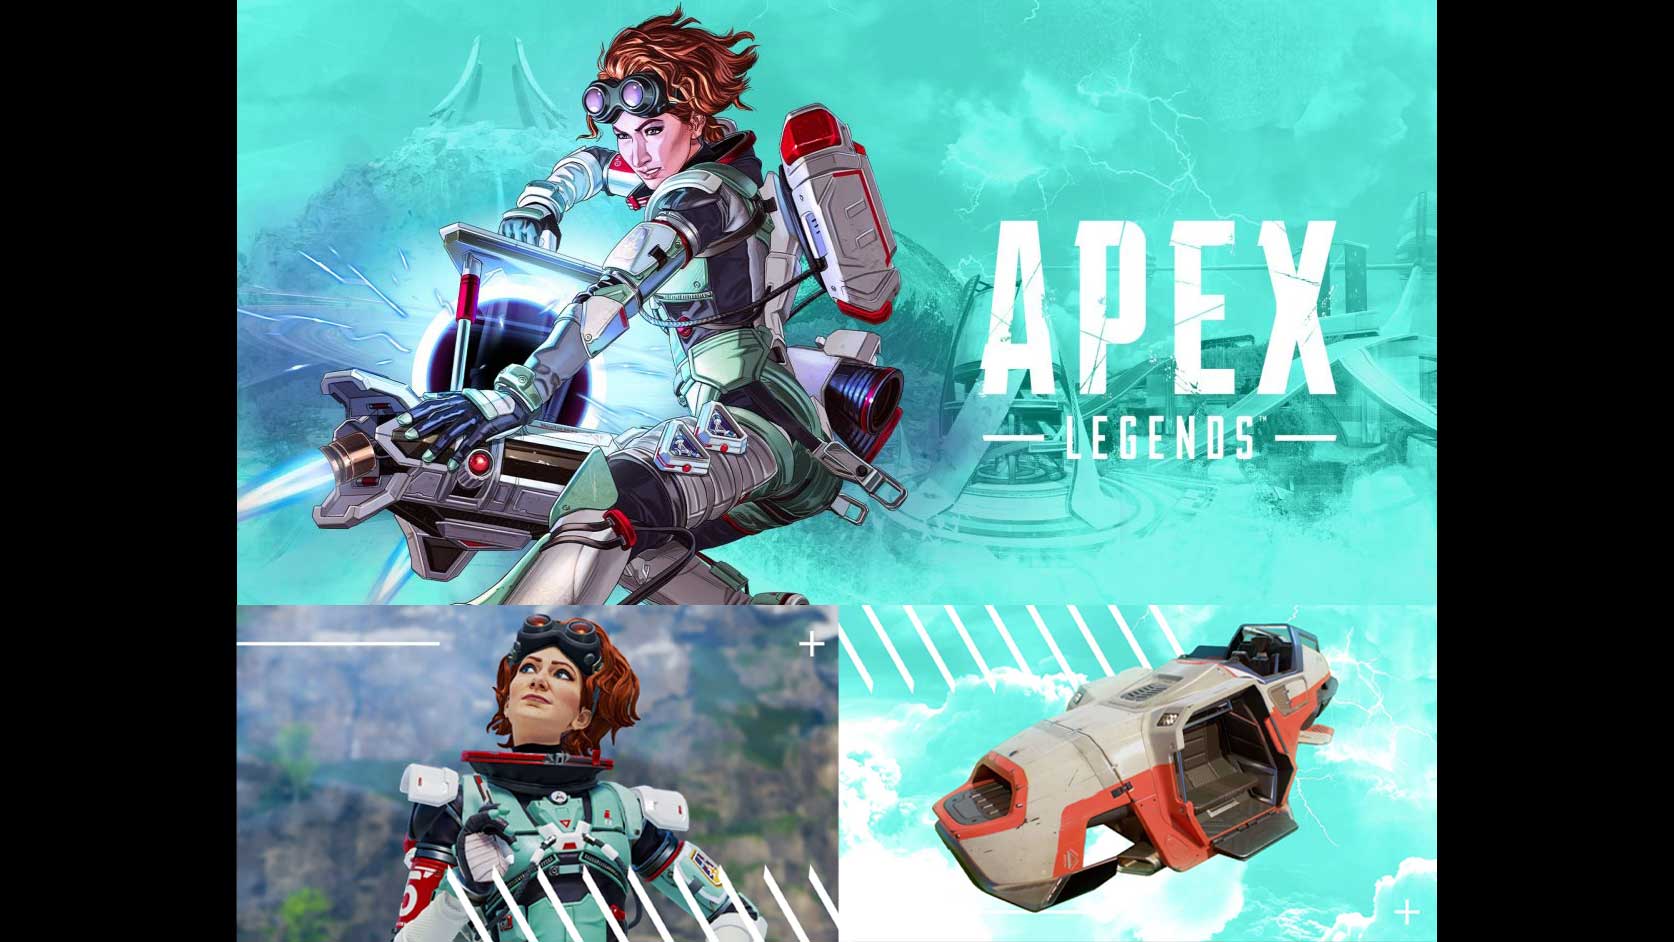 apex featured image season 7.jpg.adapt .crop191x100.1200w babt v2